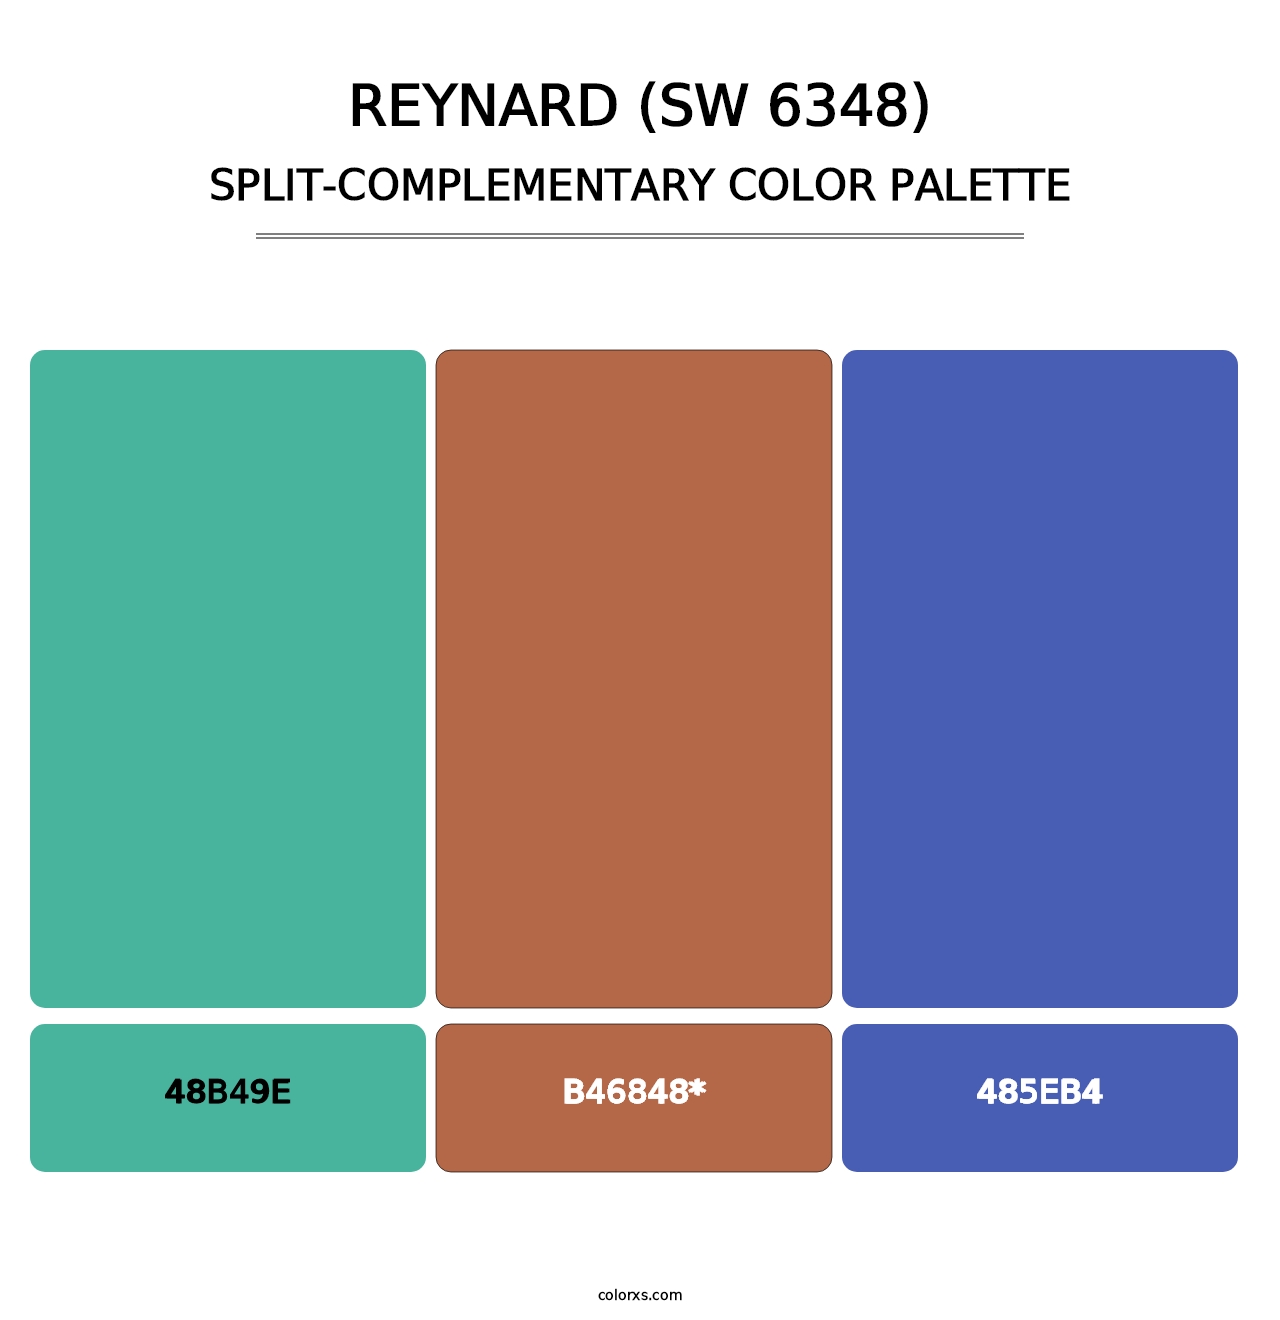 Reynard (SW 6348) - Split-Complementary Color Palette